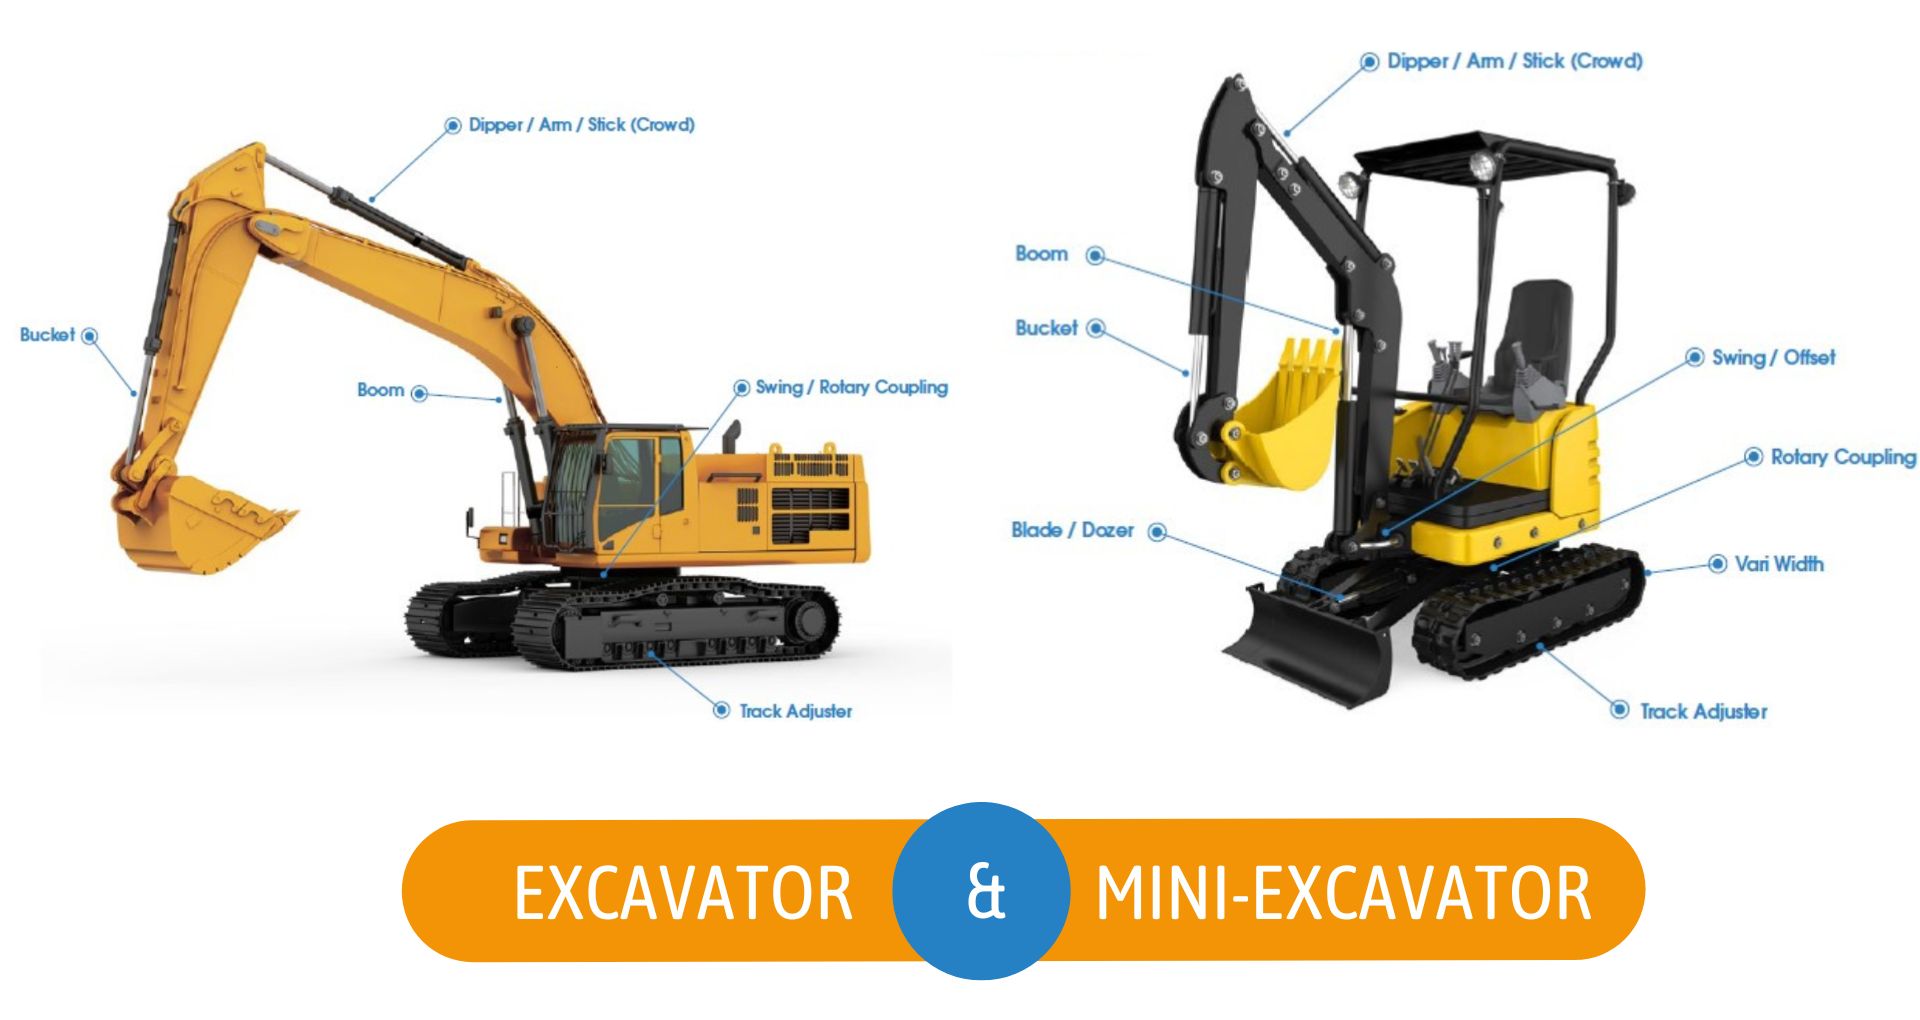 Excavator and Mini excavator